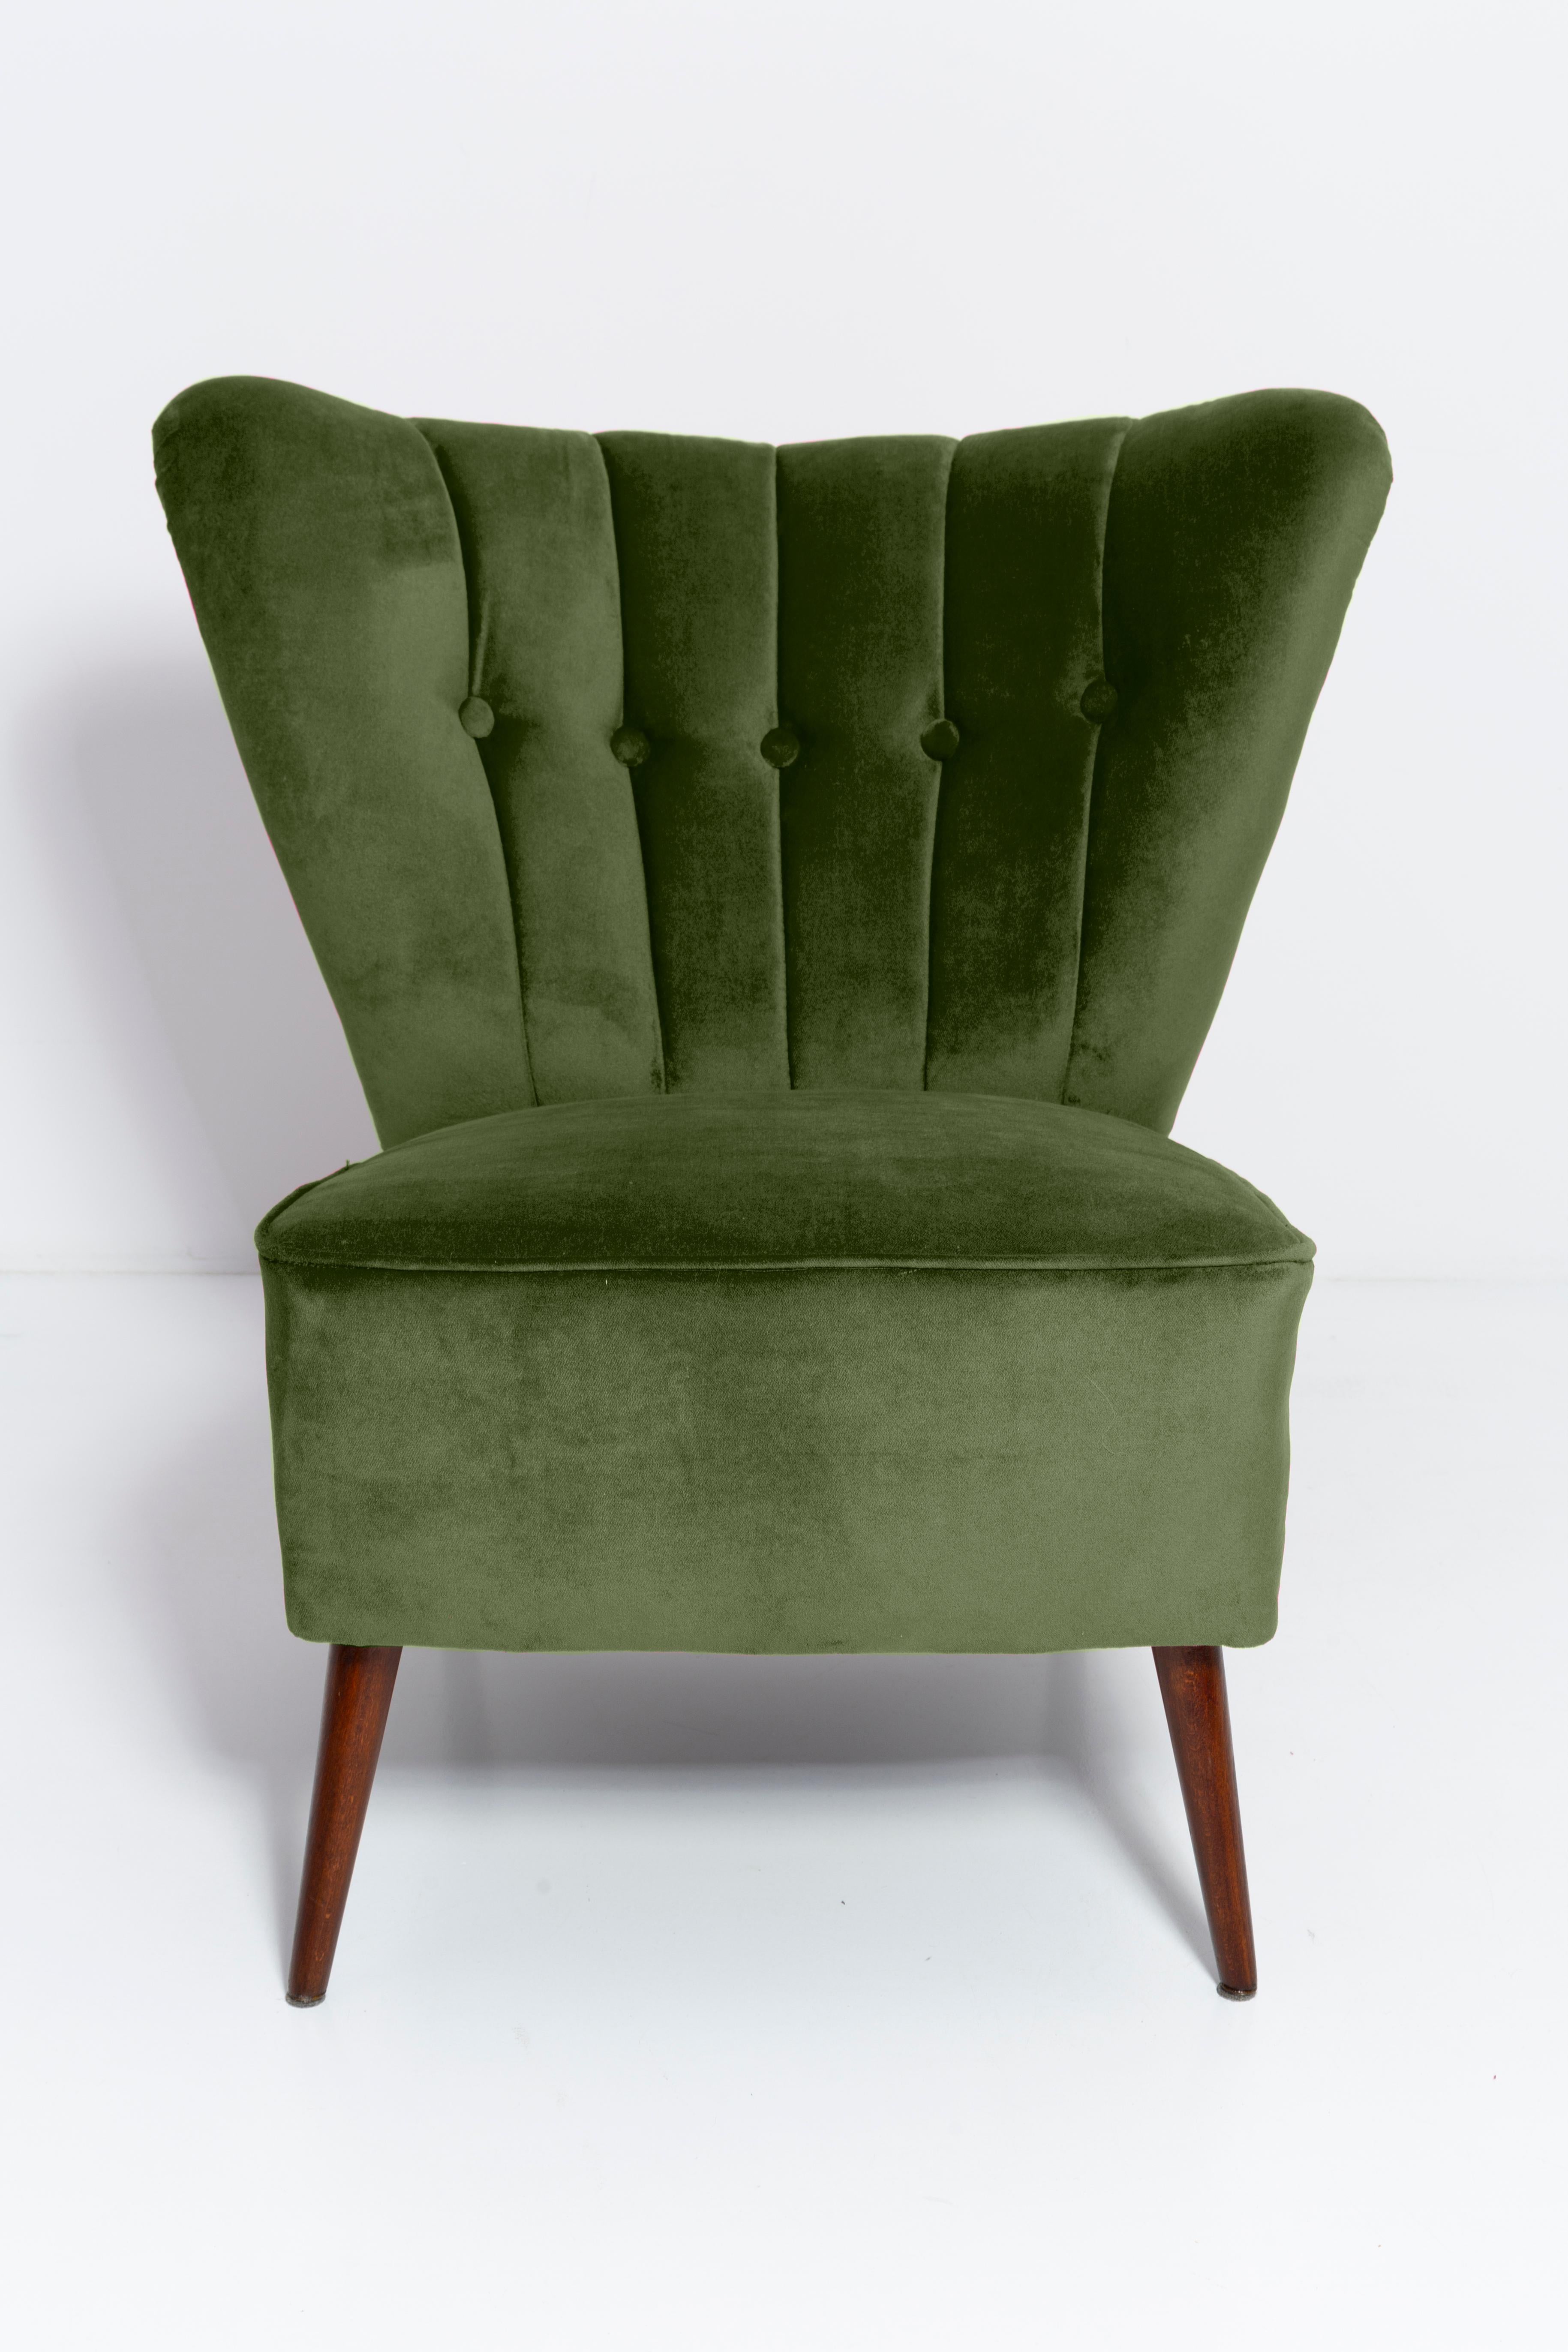 Midcentury Green Velvet Club Armchair, Europe, 1960s For Sale 1